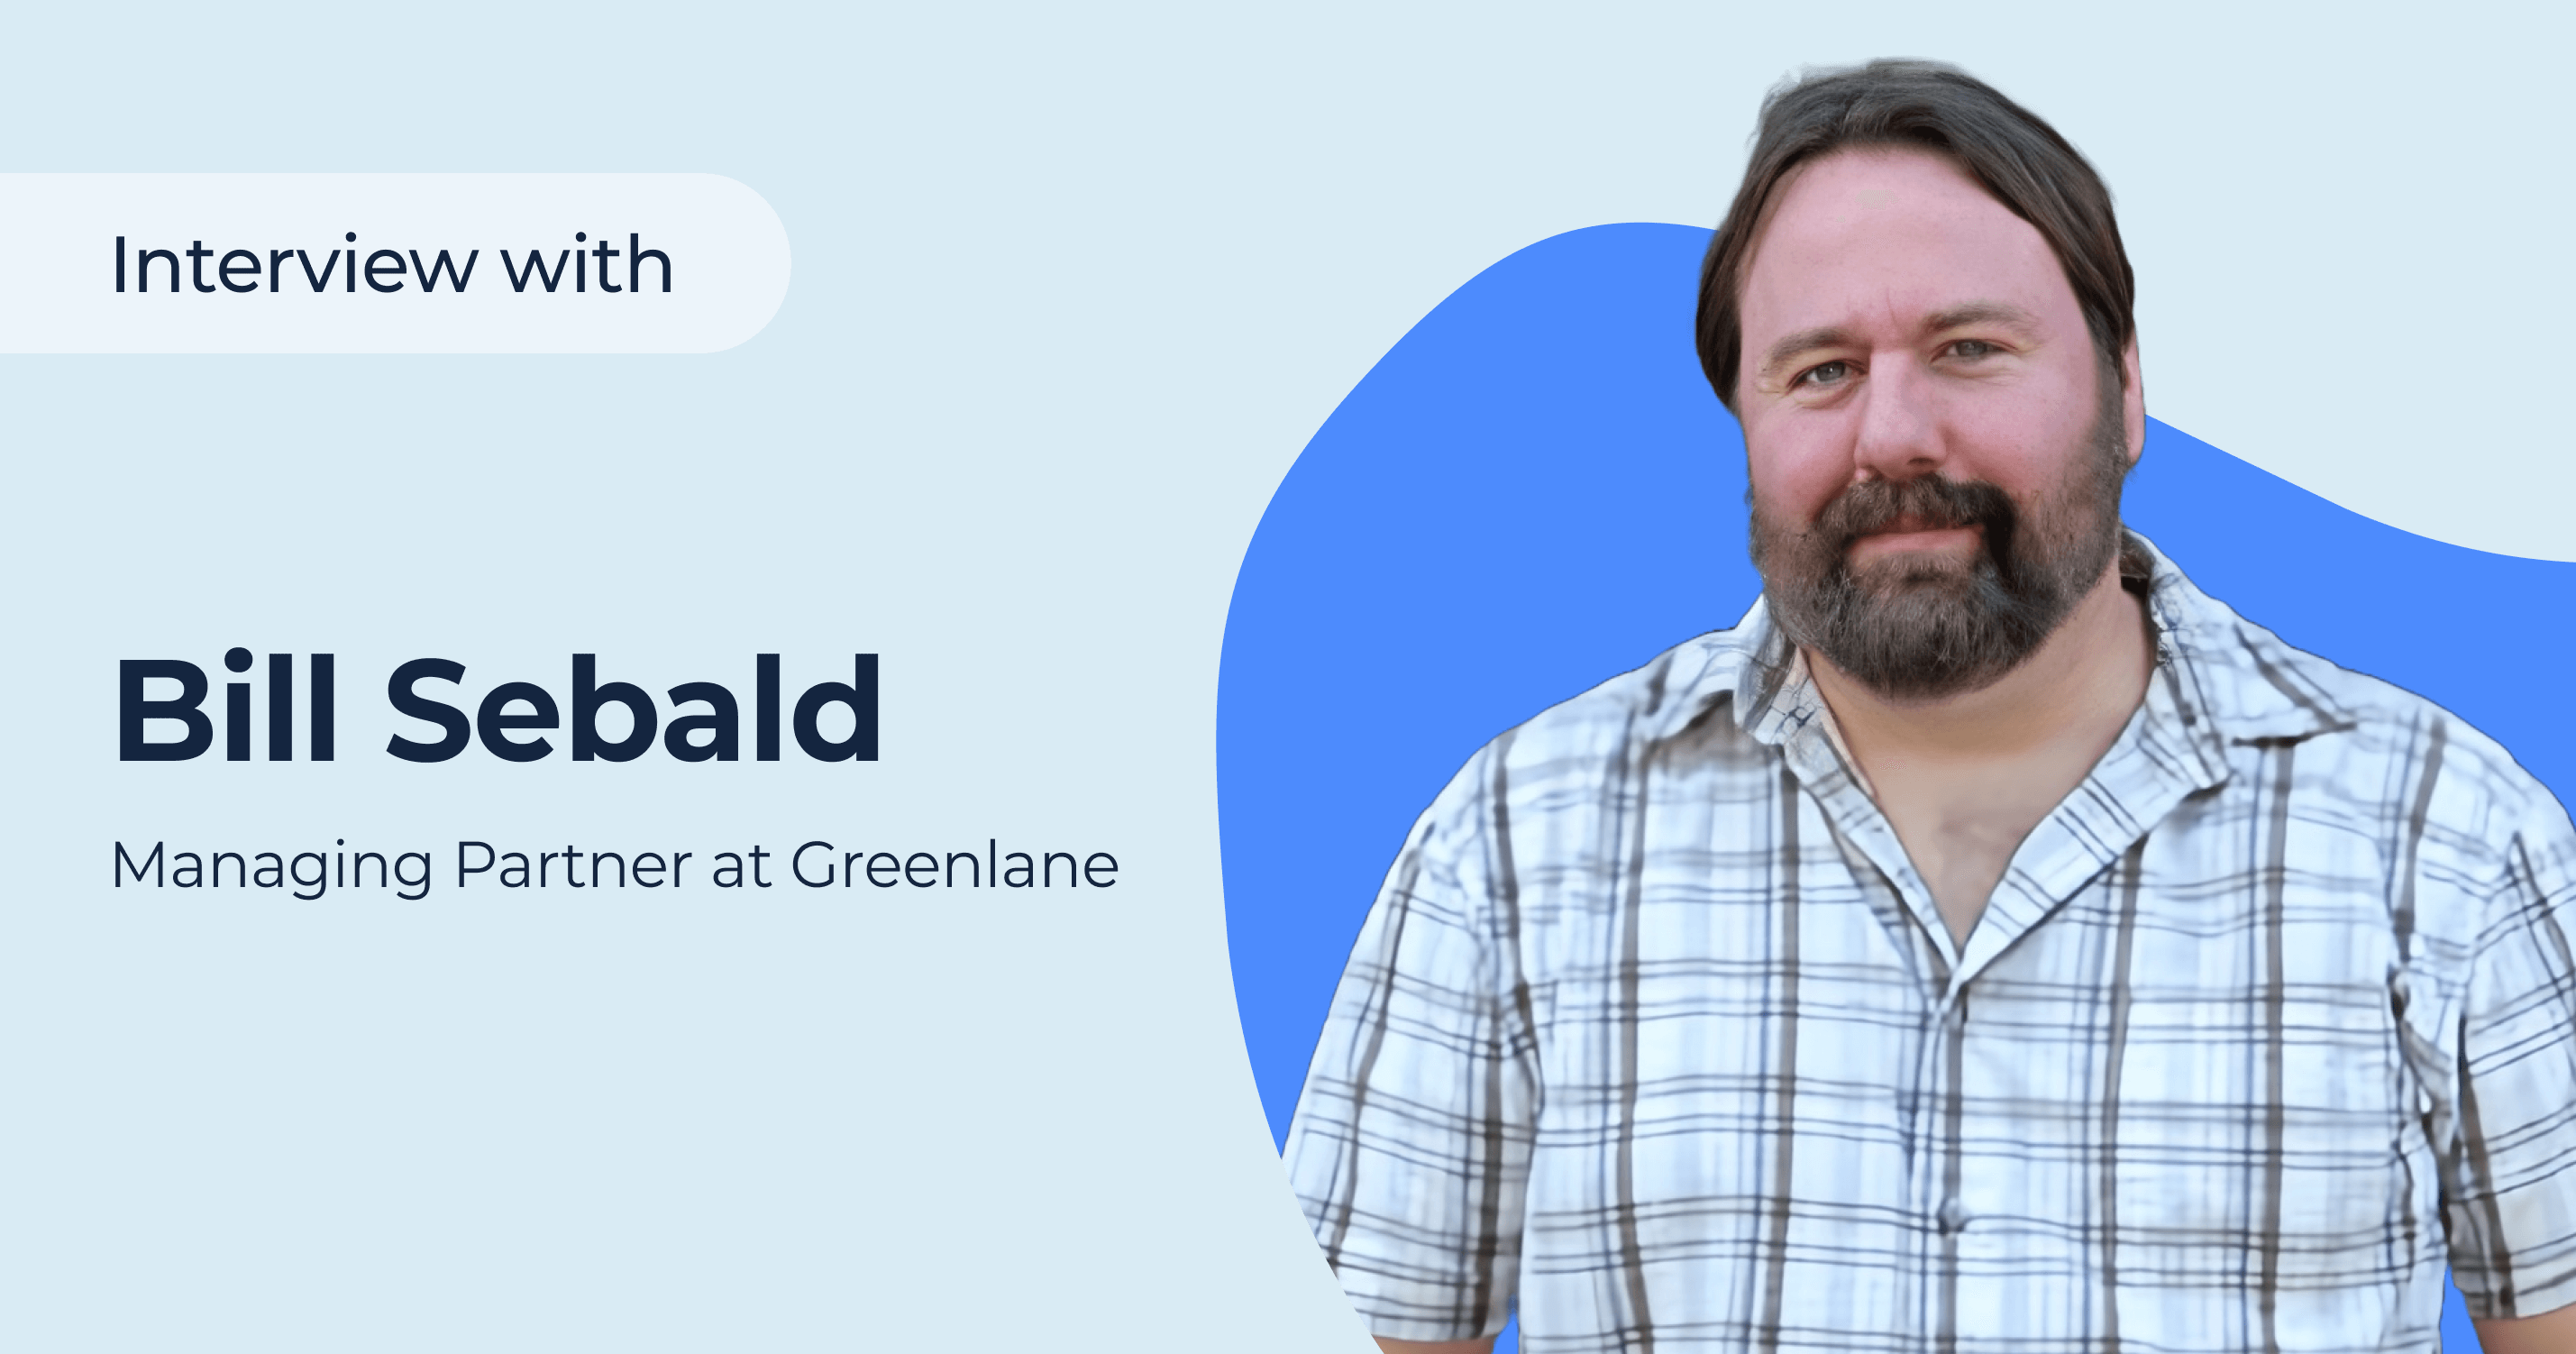 Interview with Bill Sebald, Managing Partner at Greenlane